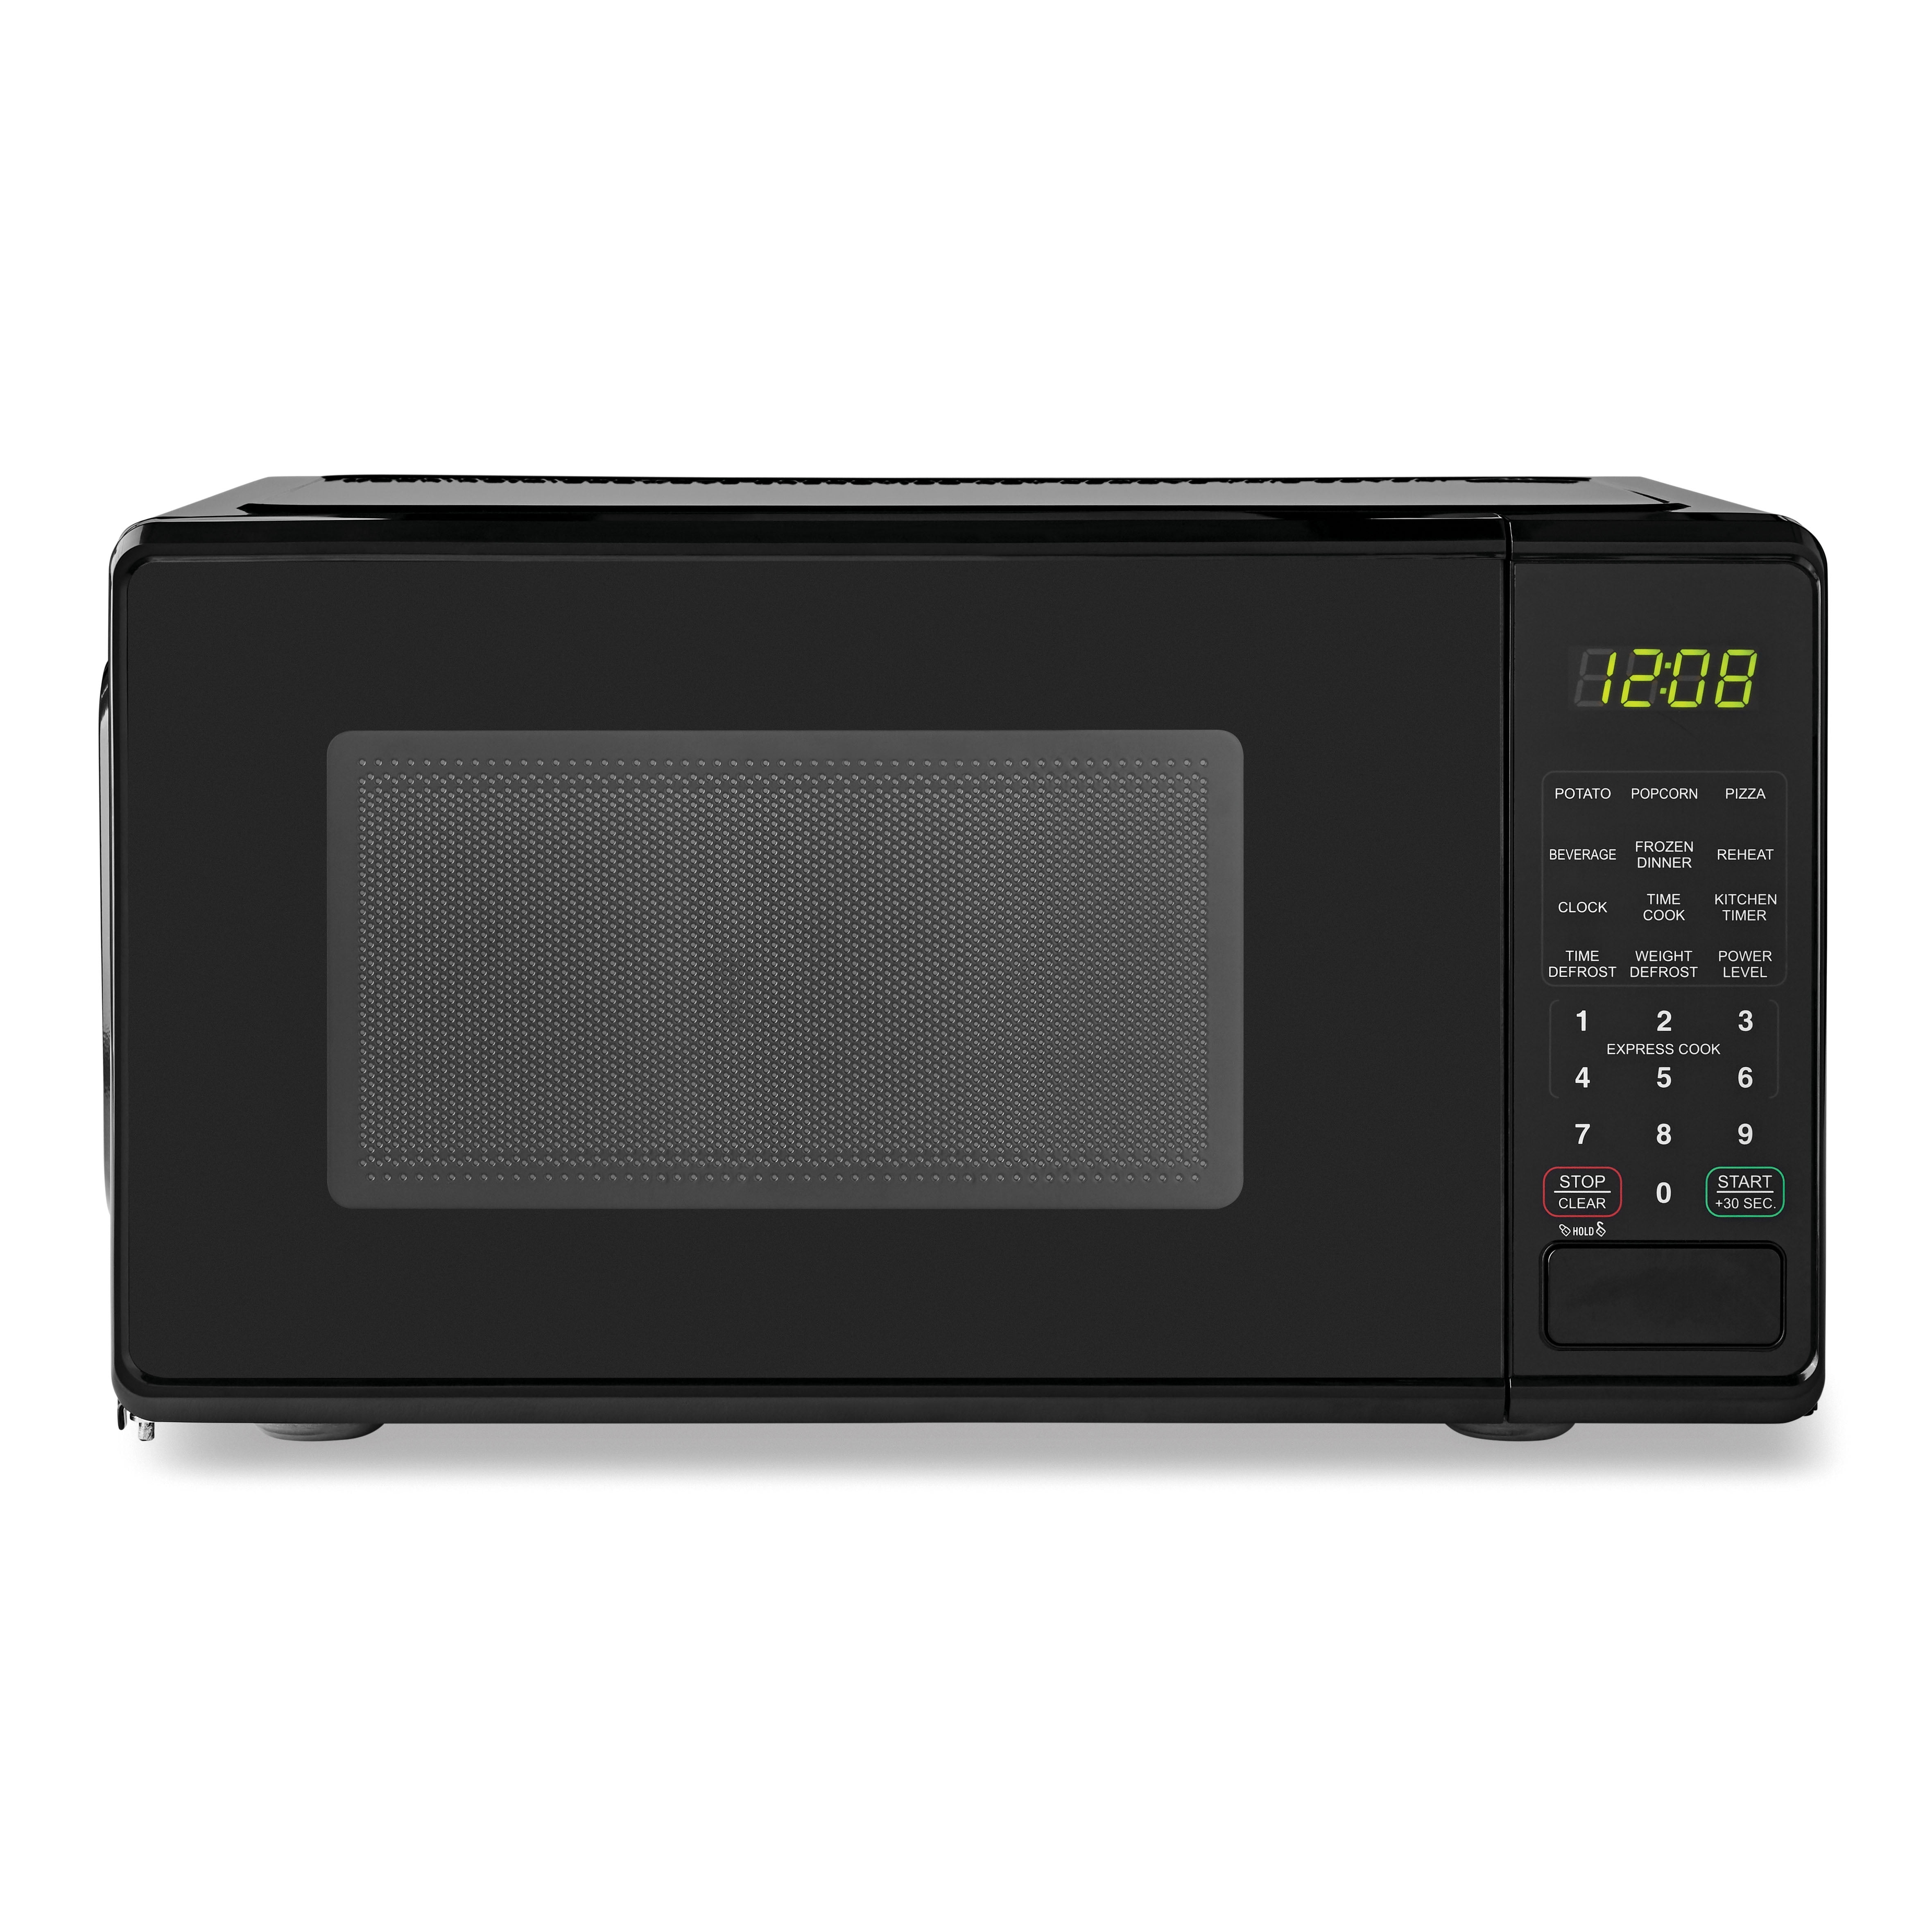 Mainstays 0.7 Cu ft Compact Countertop Microwave Oven, Black - Walmart.com